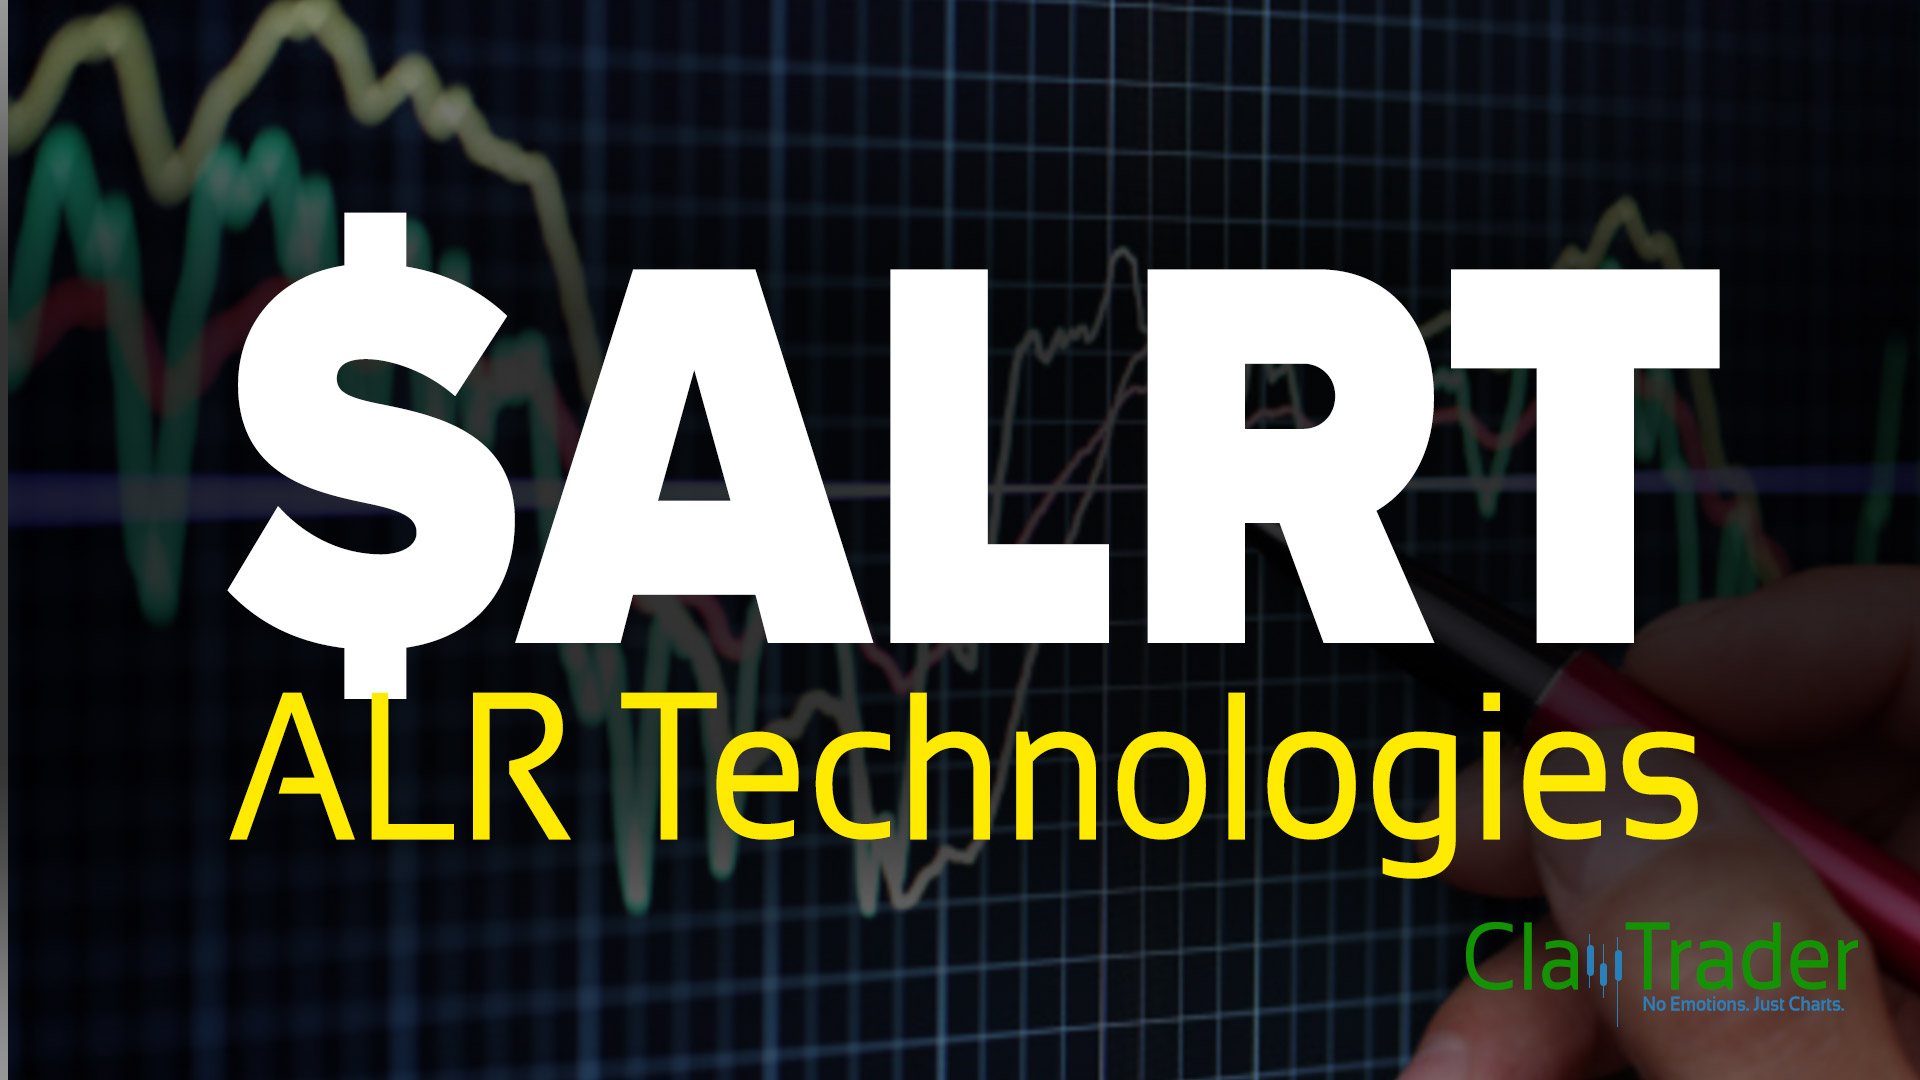 ALR Technologies - $ALRT Stock Chart Technical Analysis